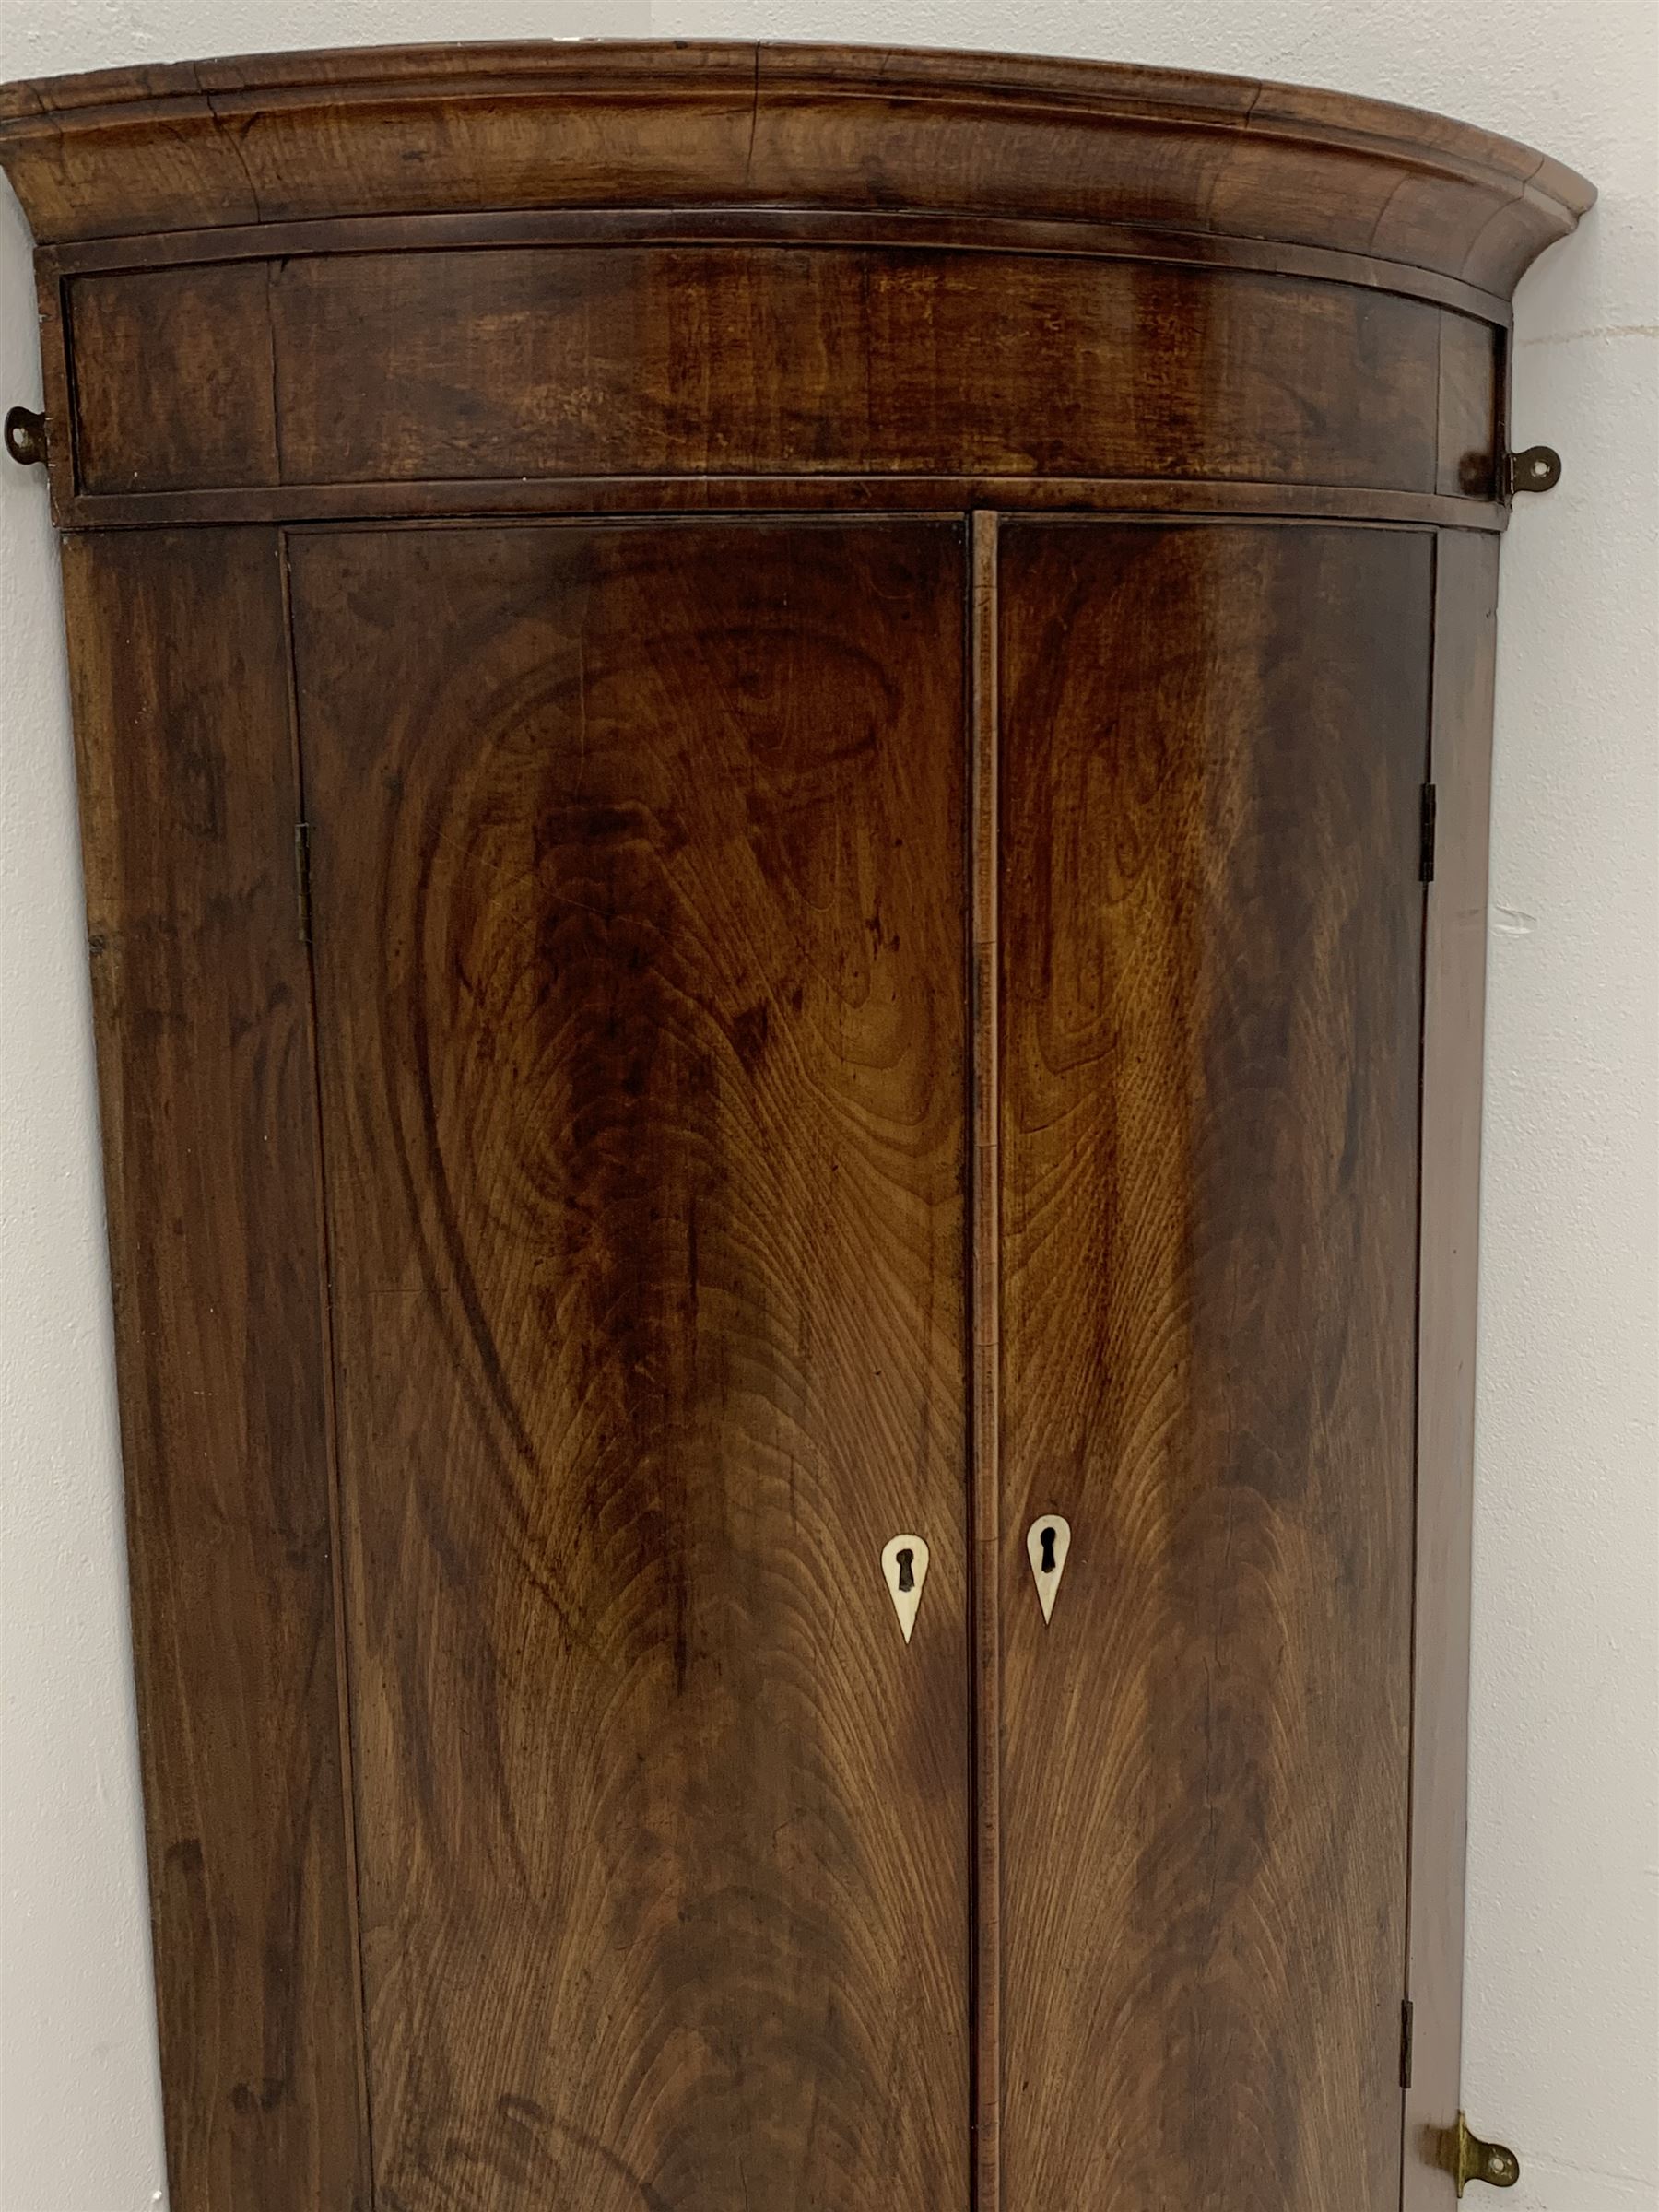 19th century bow front mahogany corner cupboard - Image 2 of 4